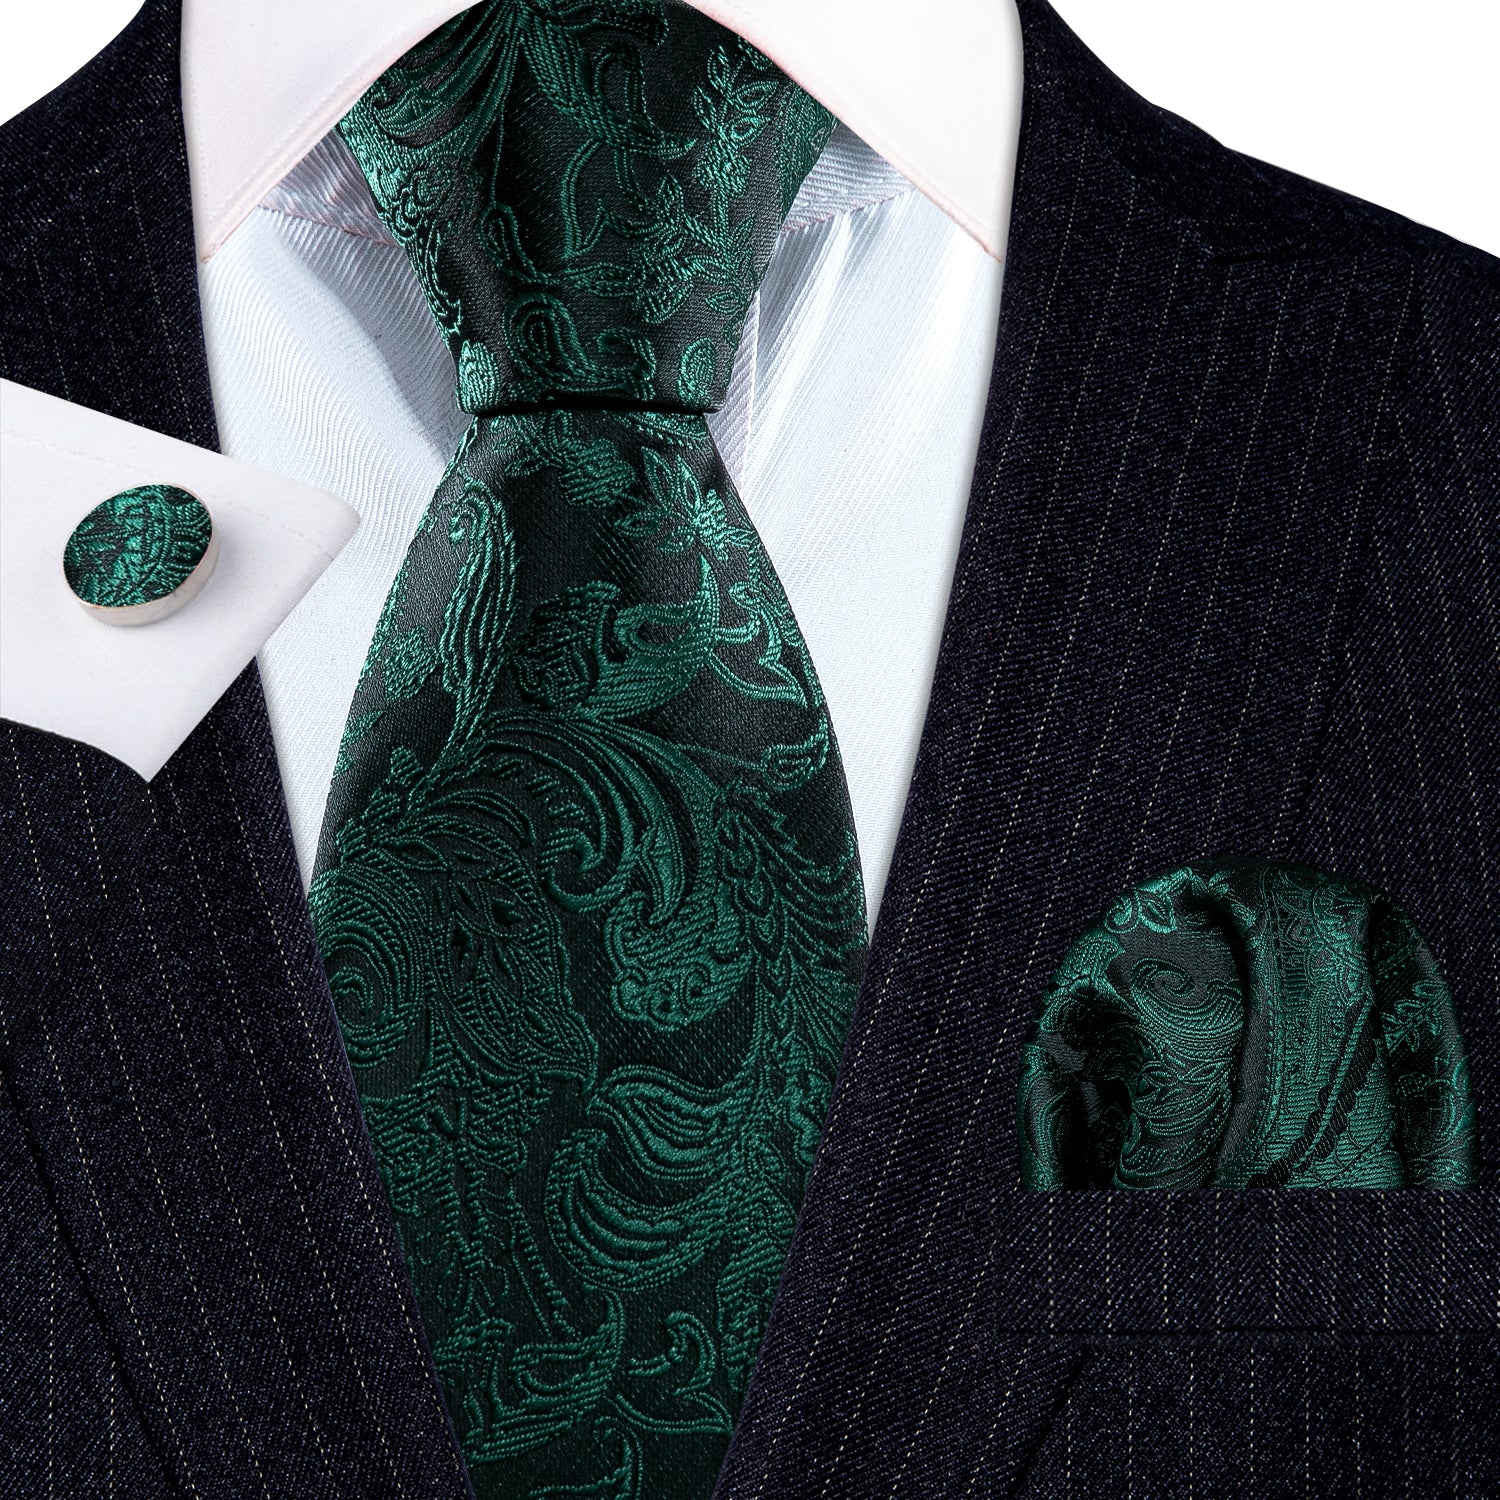 Black Green Paisley Silk Tie Hanky Cufflinks Set